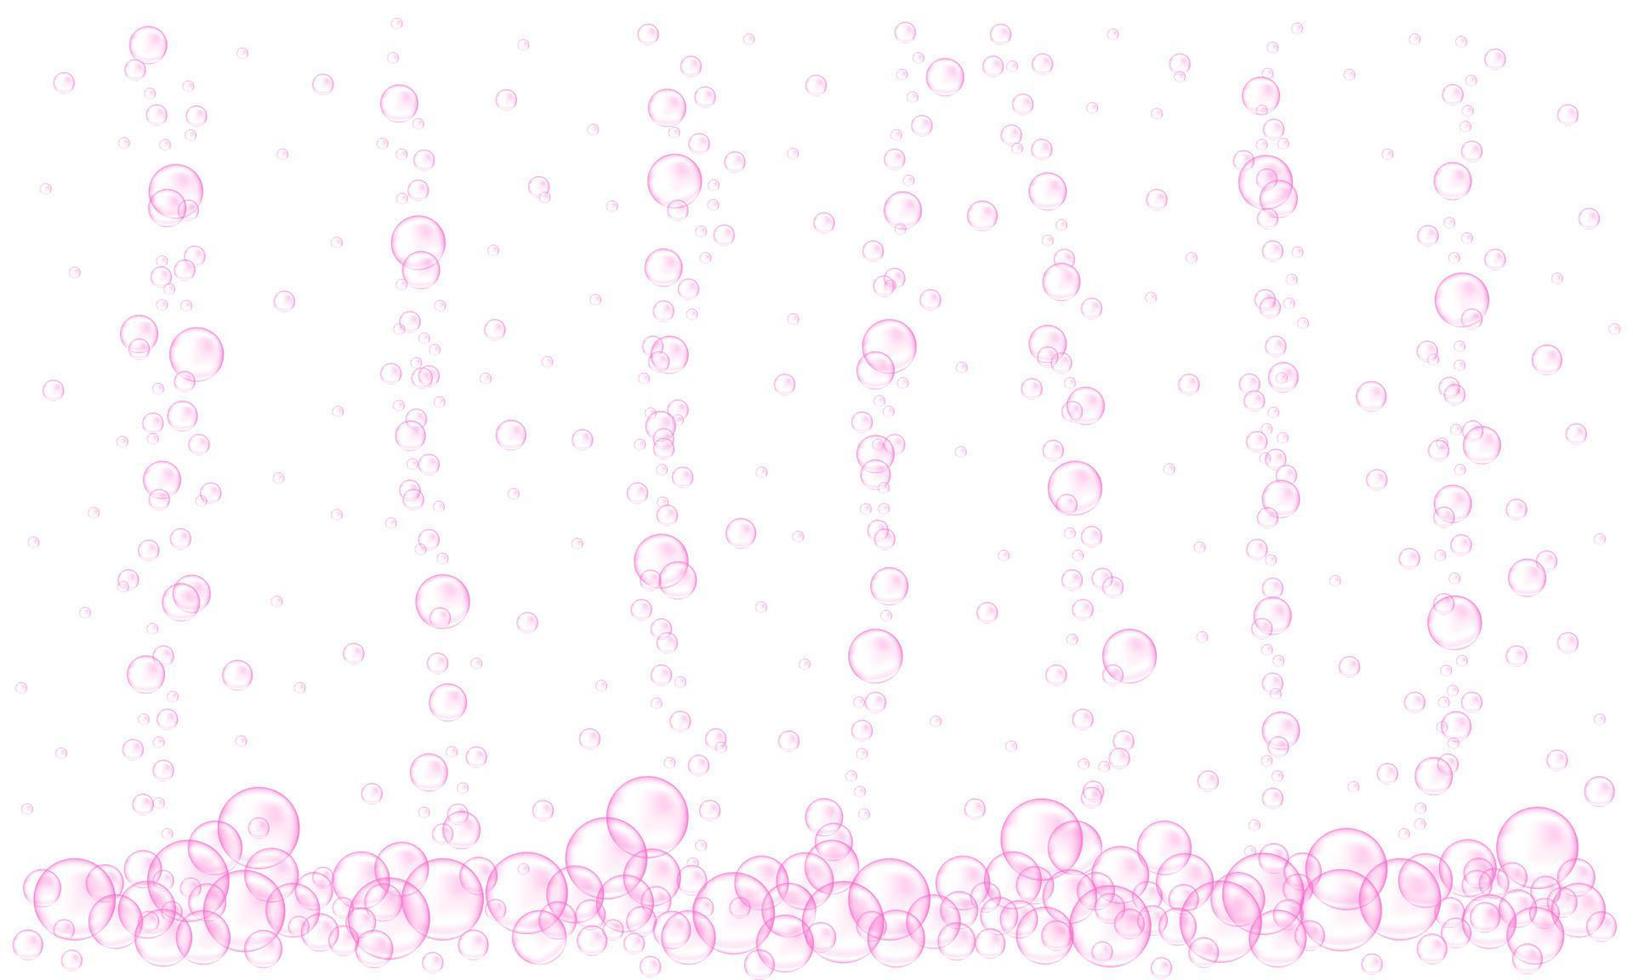 corriente de burbujas de oxígeno rosa. textura de agua carbonatada con gas. bebida de cereza o fresa, agua mineral, cerveza, soda, cola, limonada, champán, vino espumoso vector